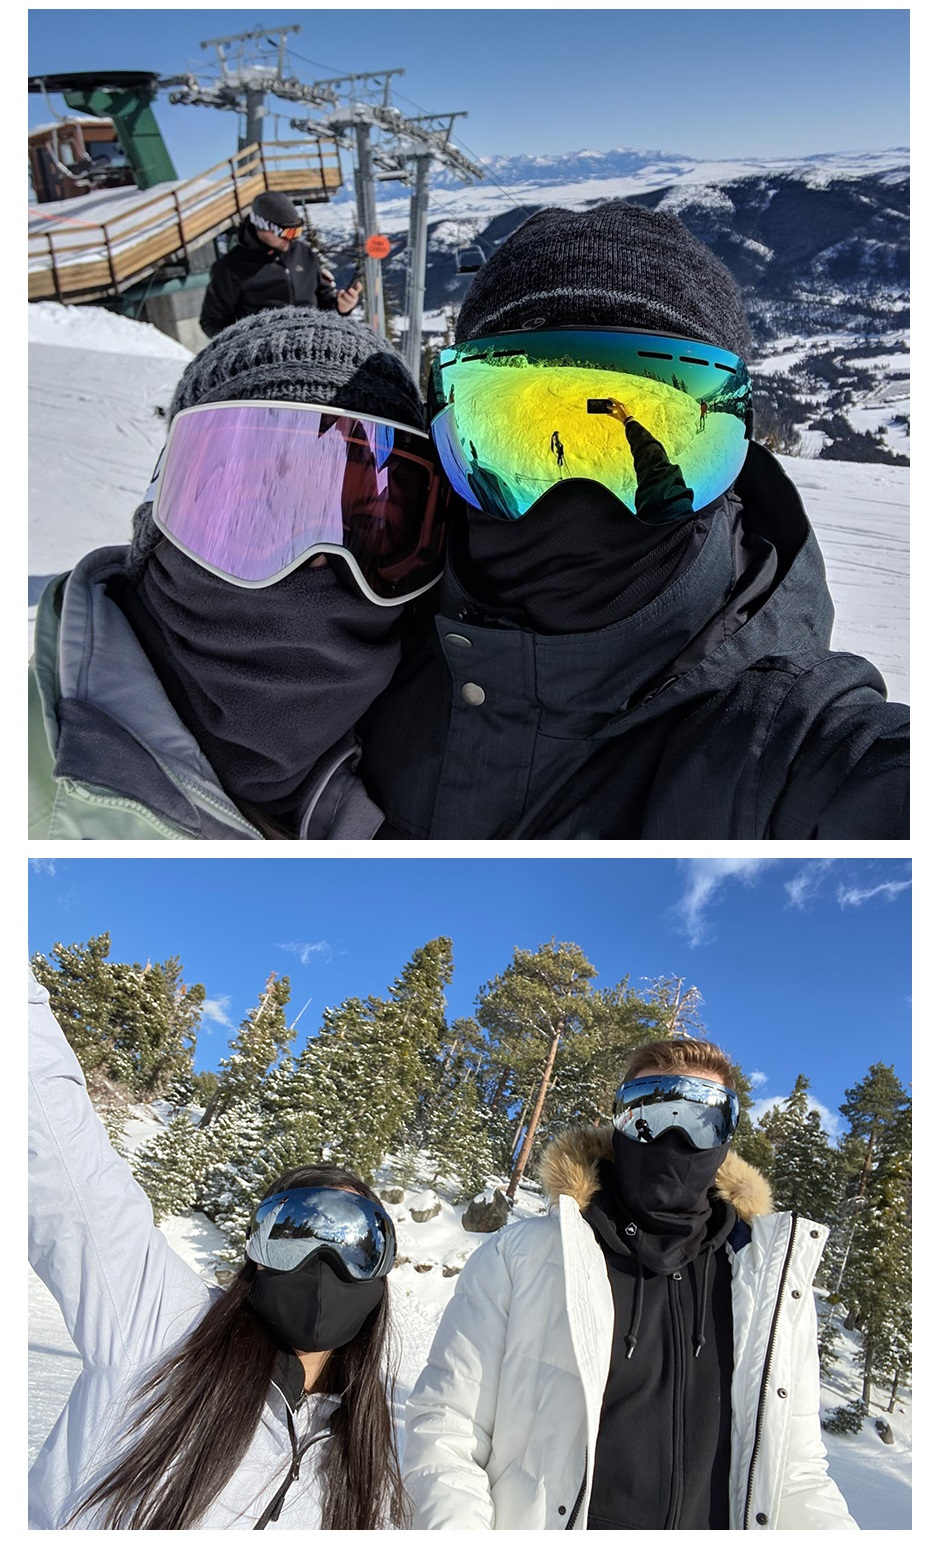 Gafas de nieve, gafas de esquí antivaho Gafas de esquí antivaho dobles Gafas  de esquí Funcionalidad inteligente